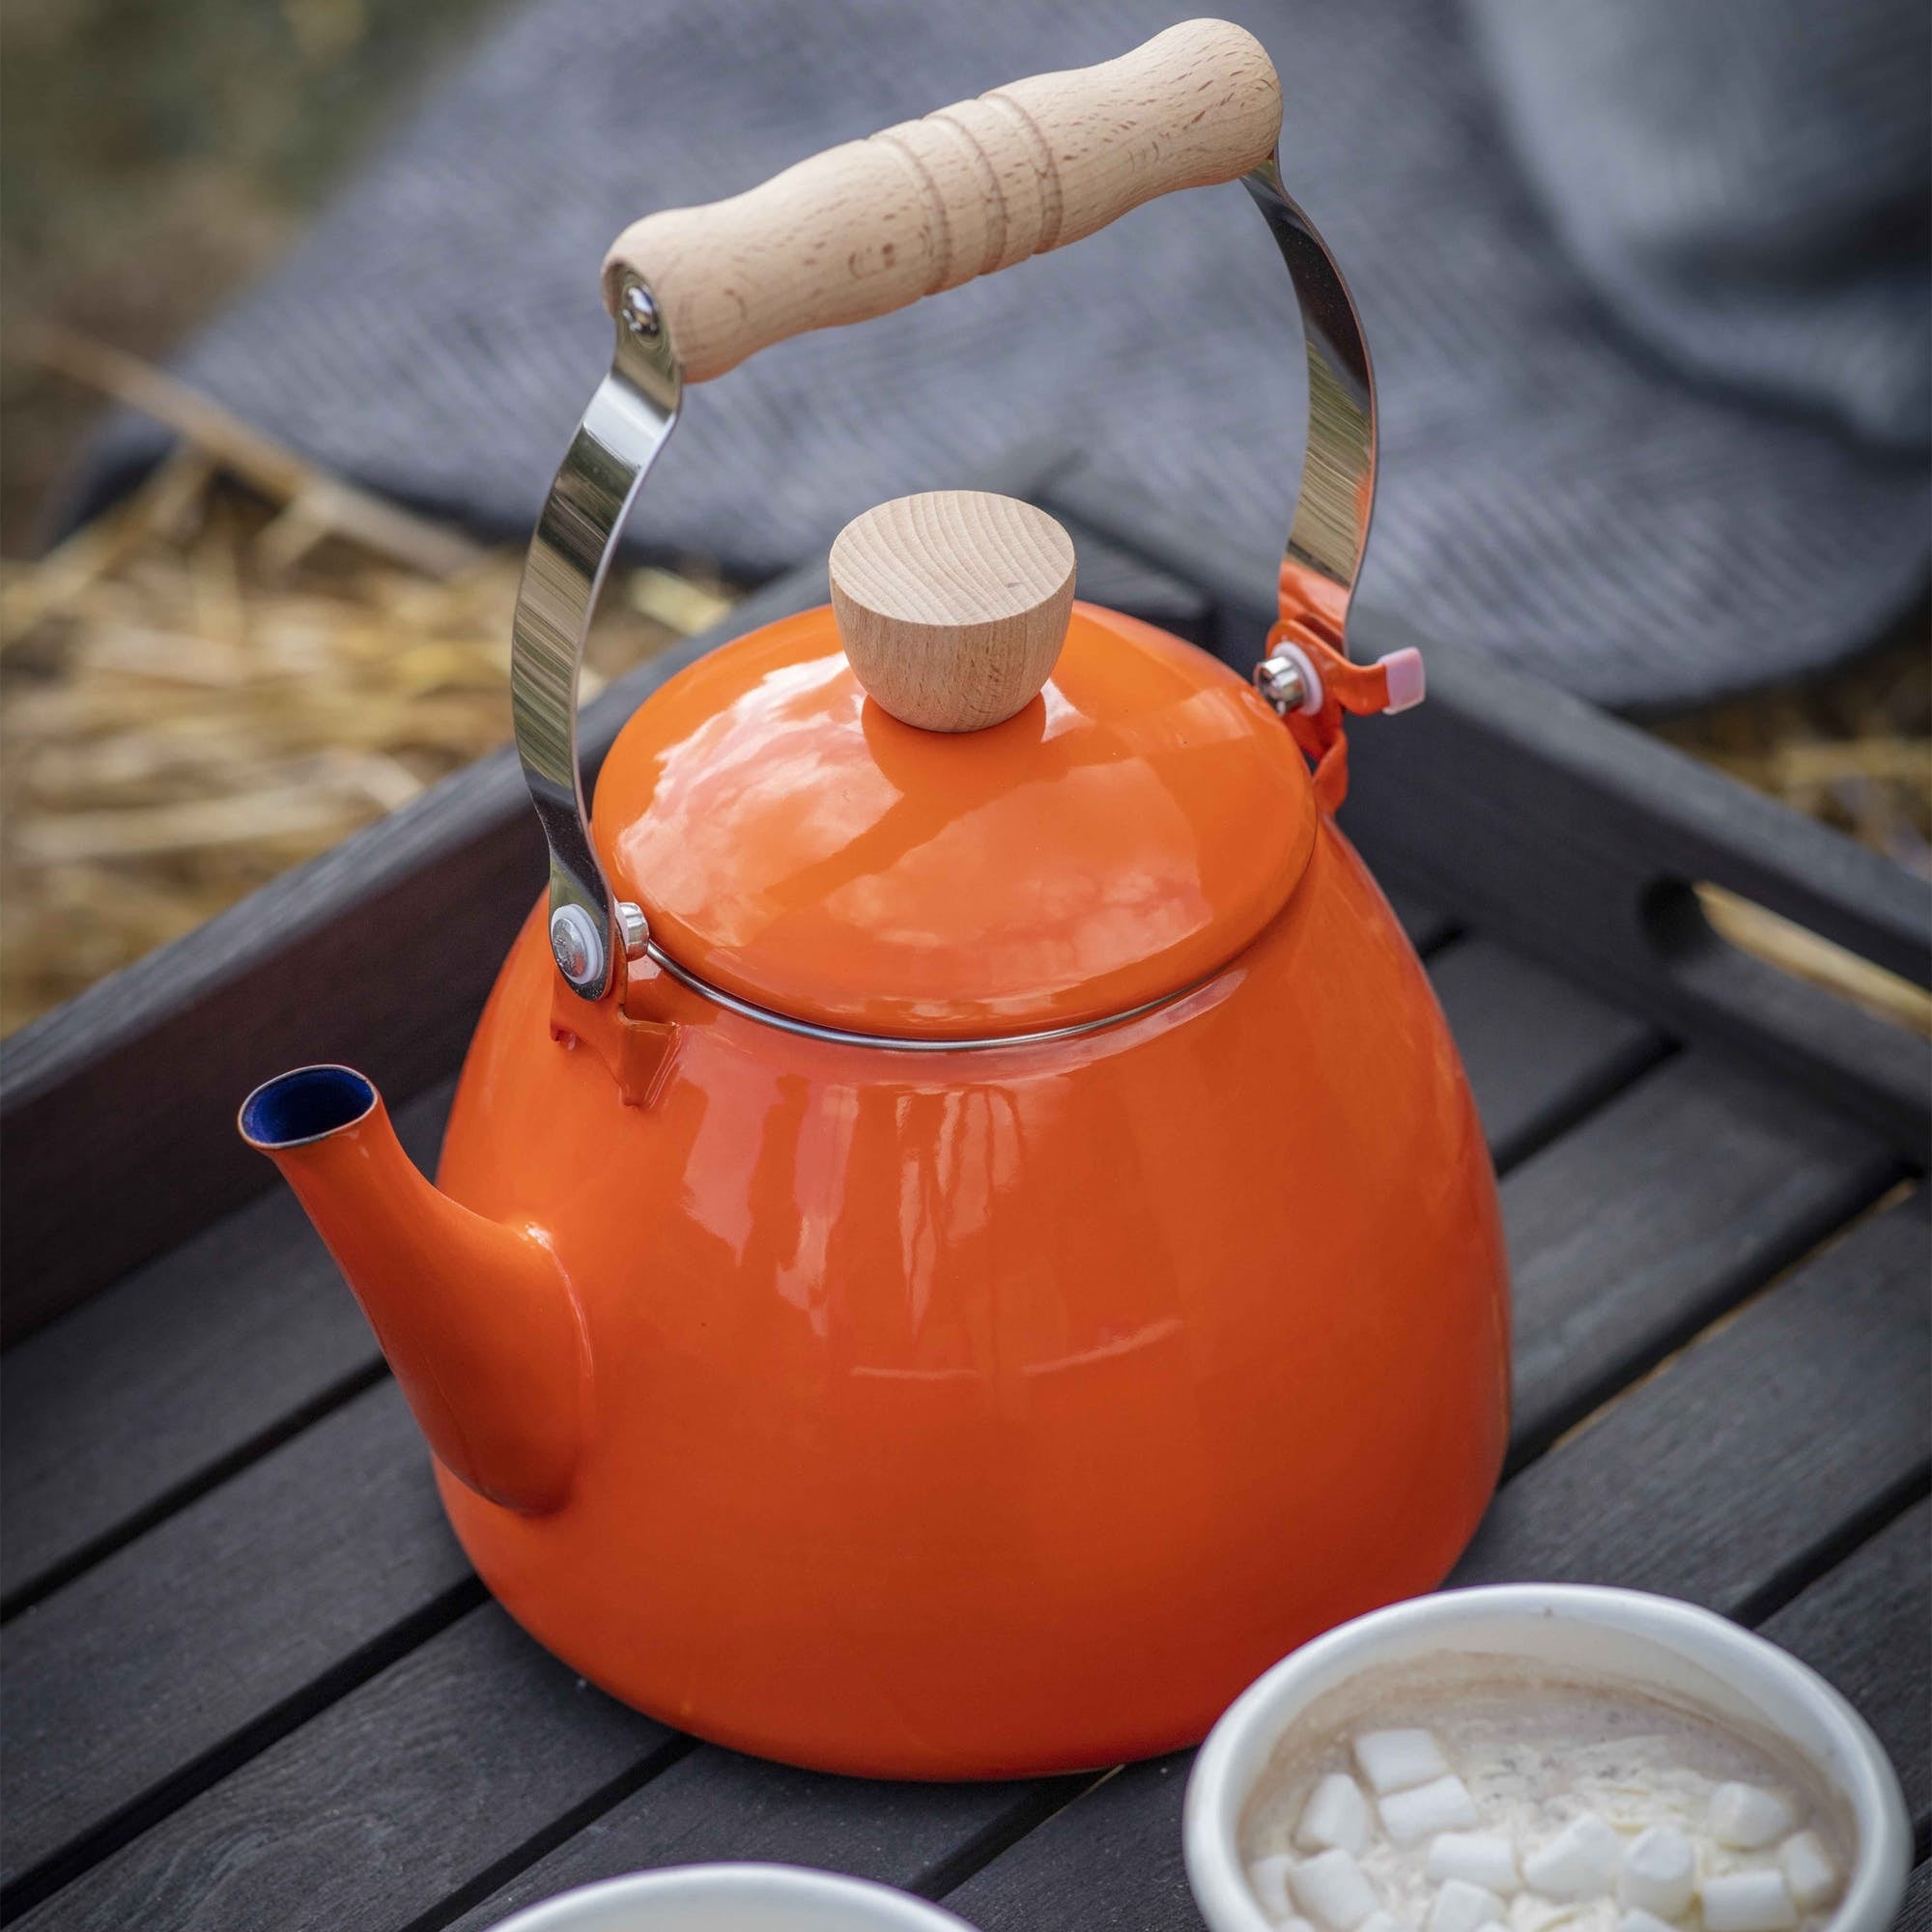 Flaming orange stove kettle - The 